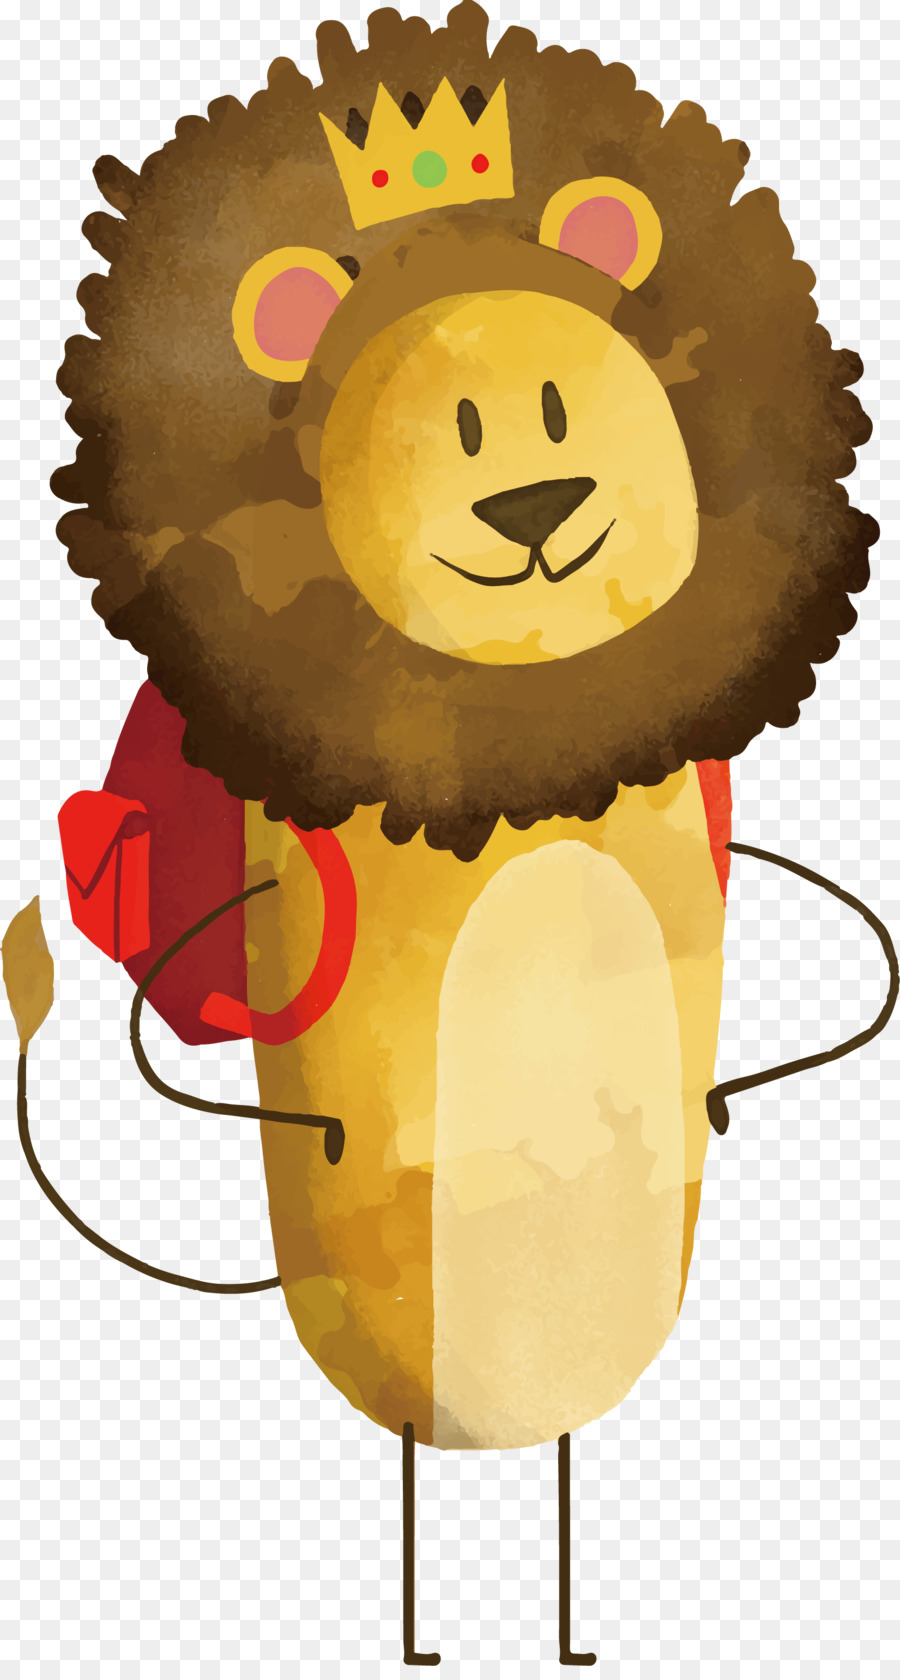 Lion Cartoon Tiger Illustration - Hand painted Lion King png download - 1651*3056 - Free Transparent Lion png Download.